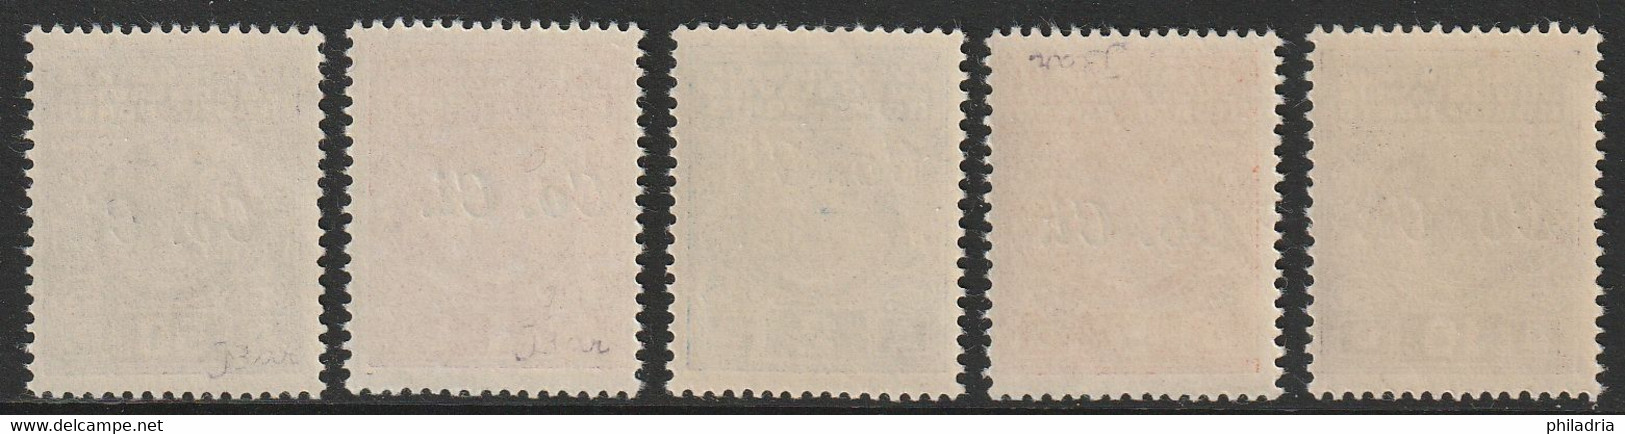 Lubiana, Ljubljana, 1941, Postage Due, Co. Ci. Overprint, Complete Set, MNH, Good Quality - Lubiana